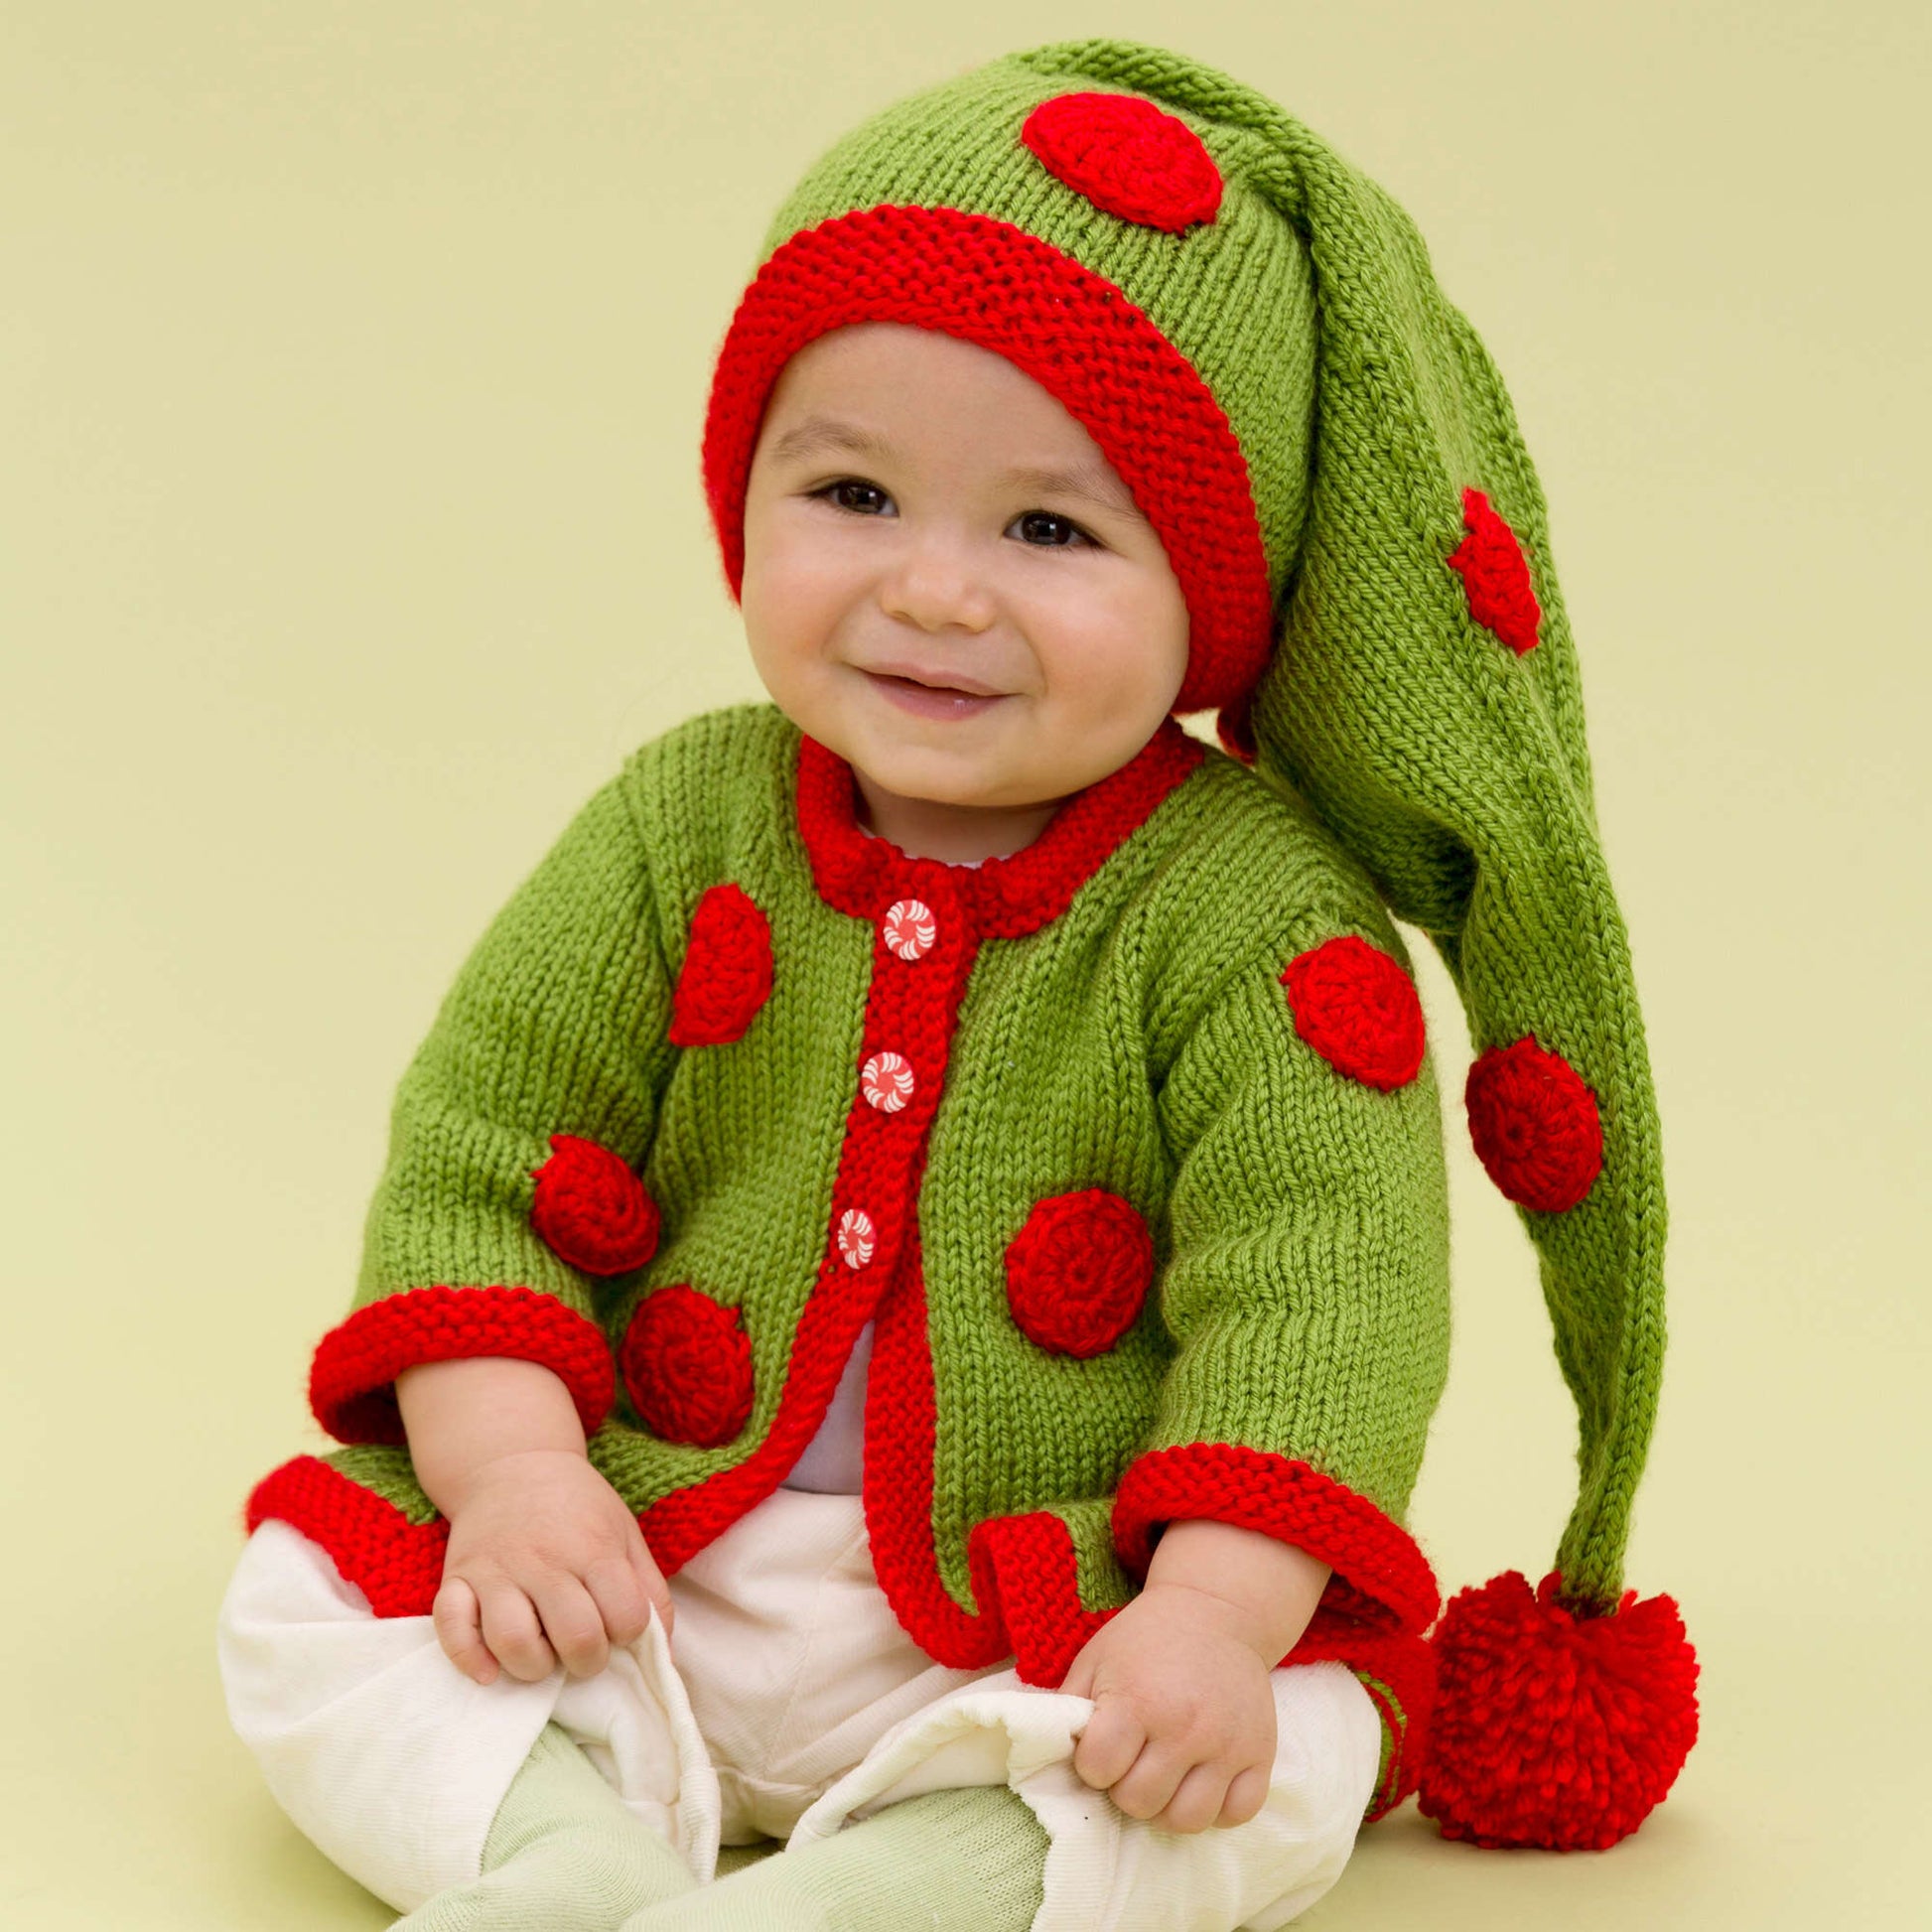 Free Red Heart Santa's Baby Elf Knit Pattern